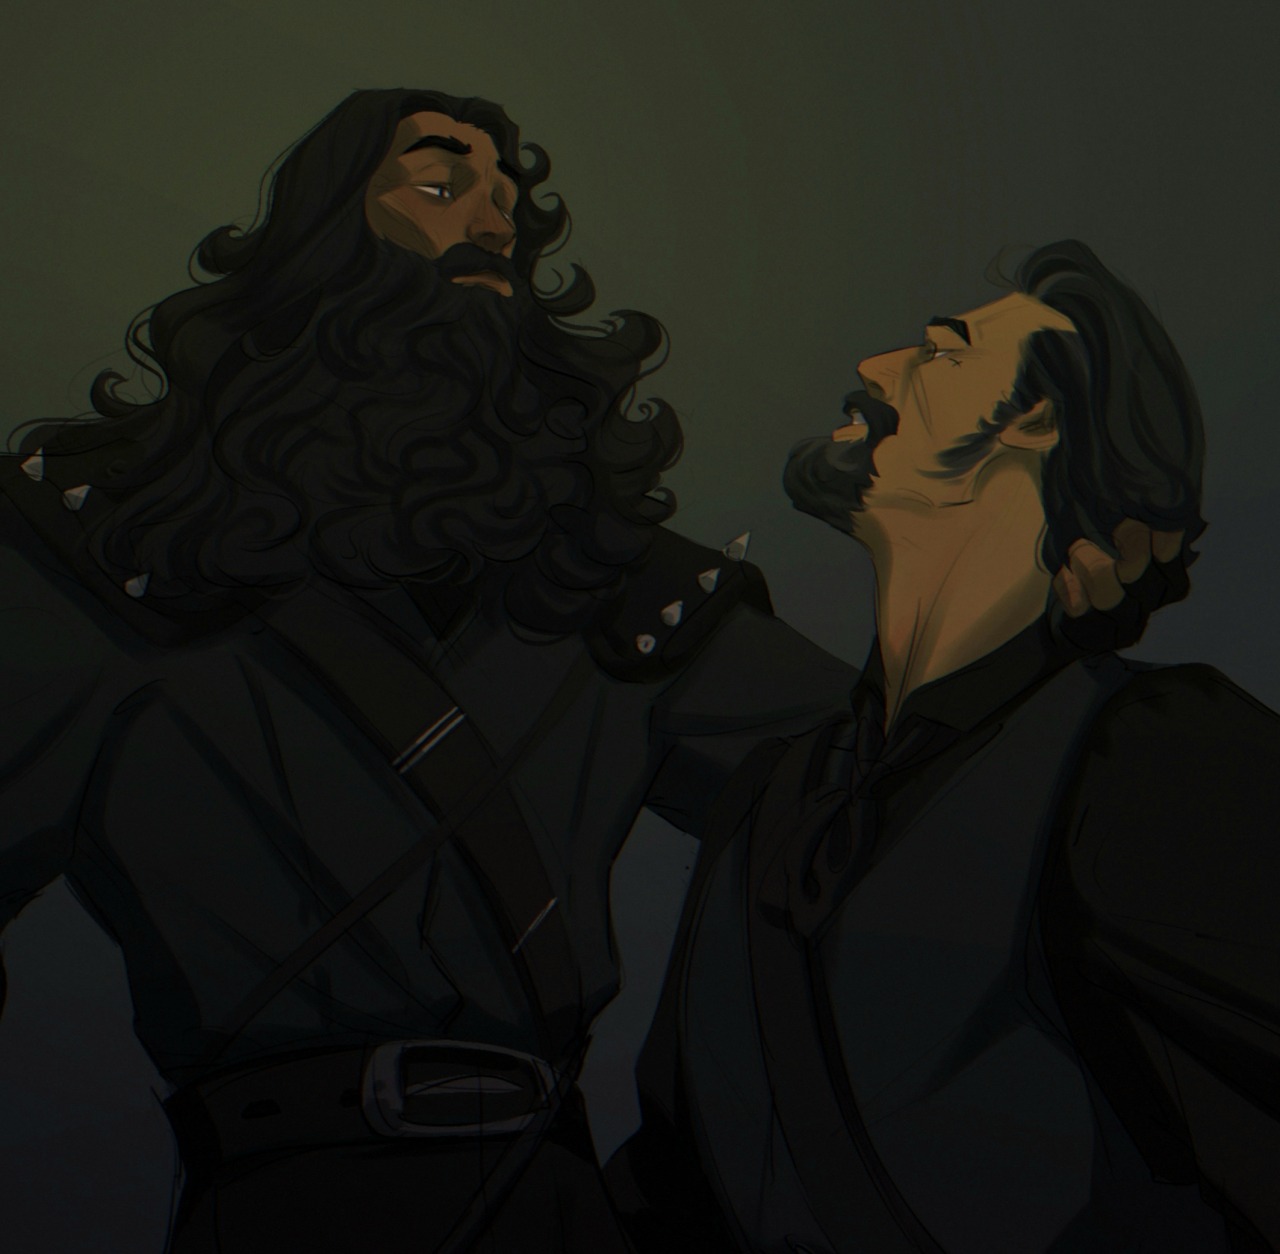 Blackbeard and izzy